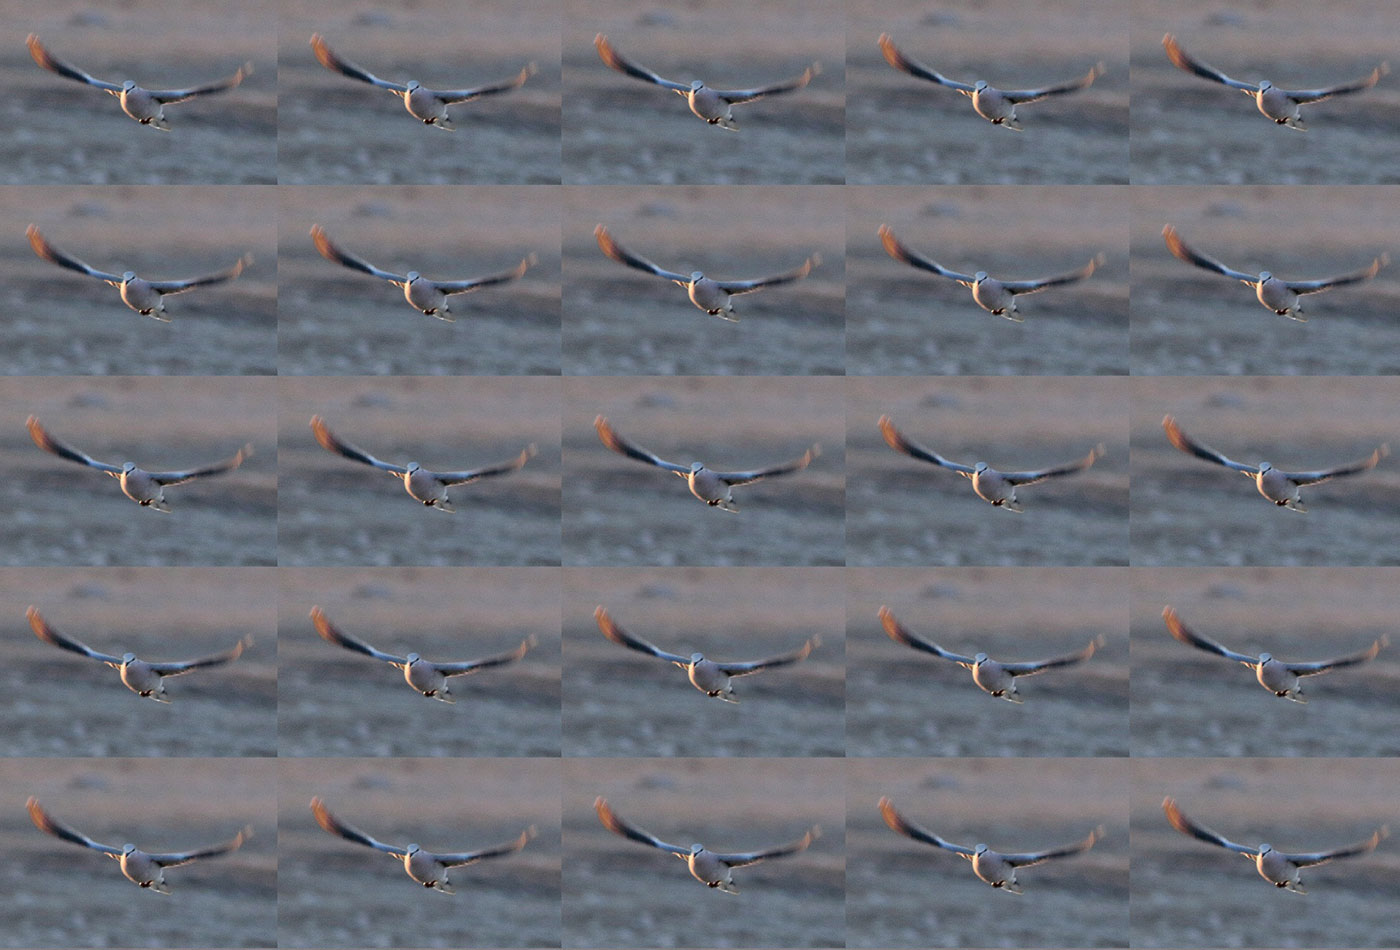 Duplicate birds in flight